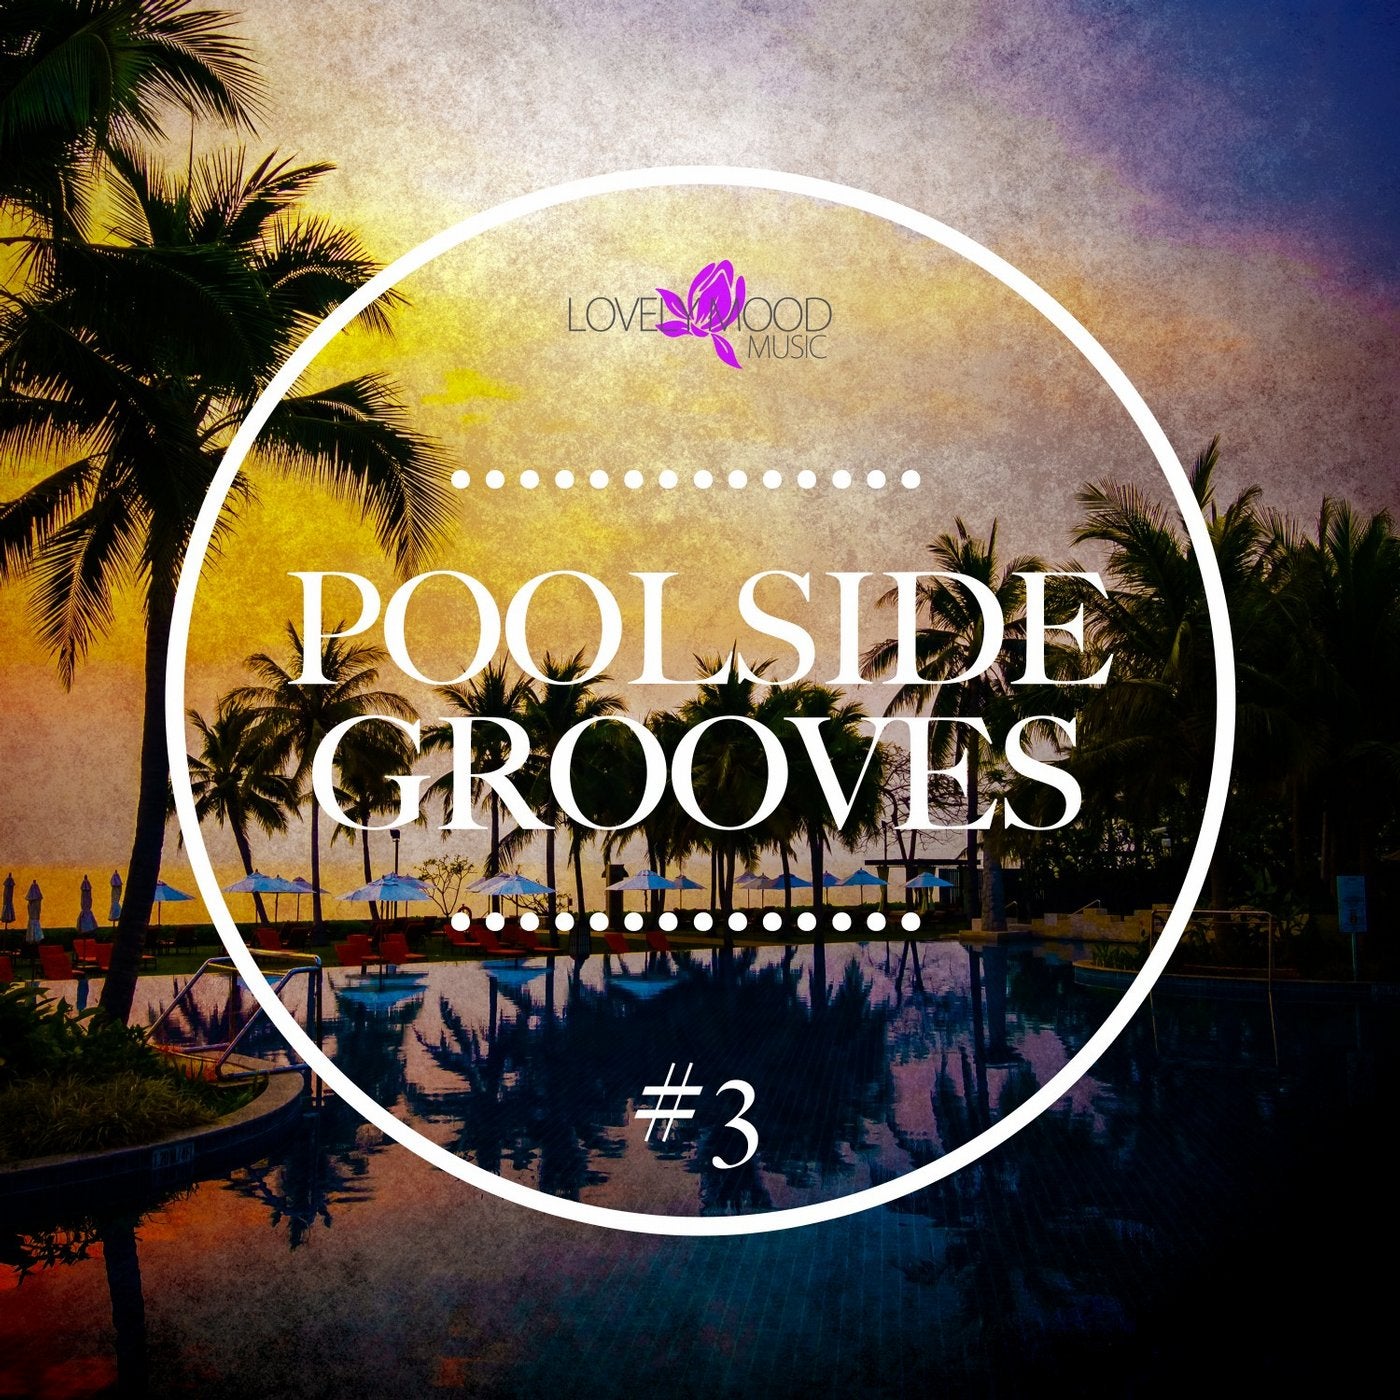 Poolside Grooves #3